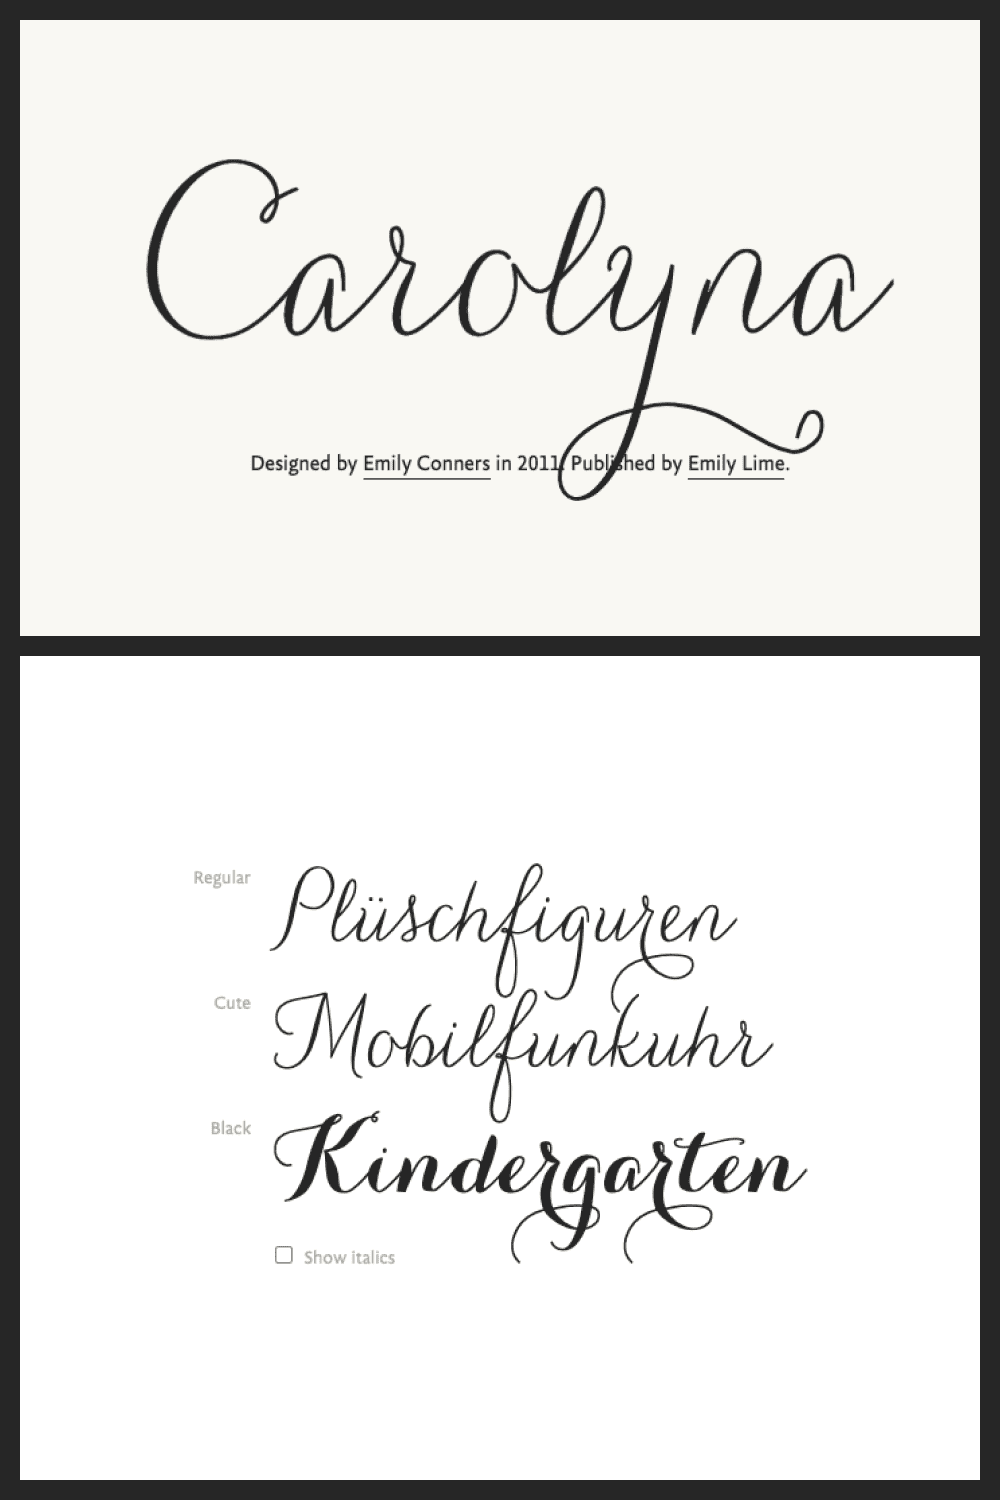 carolyna pro font test